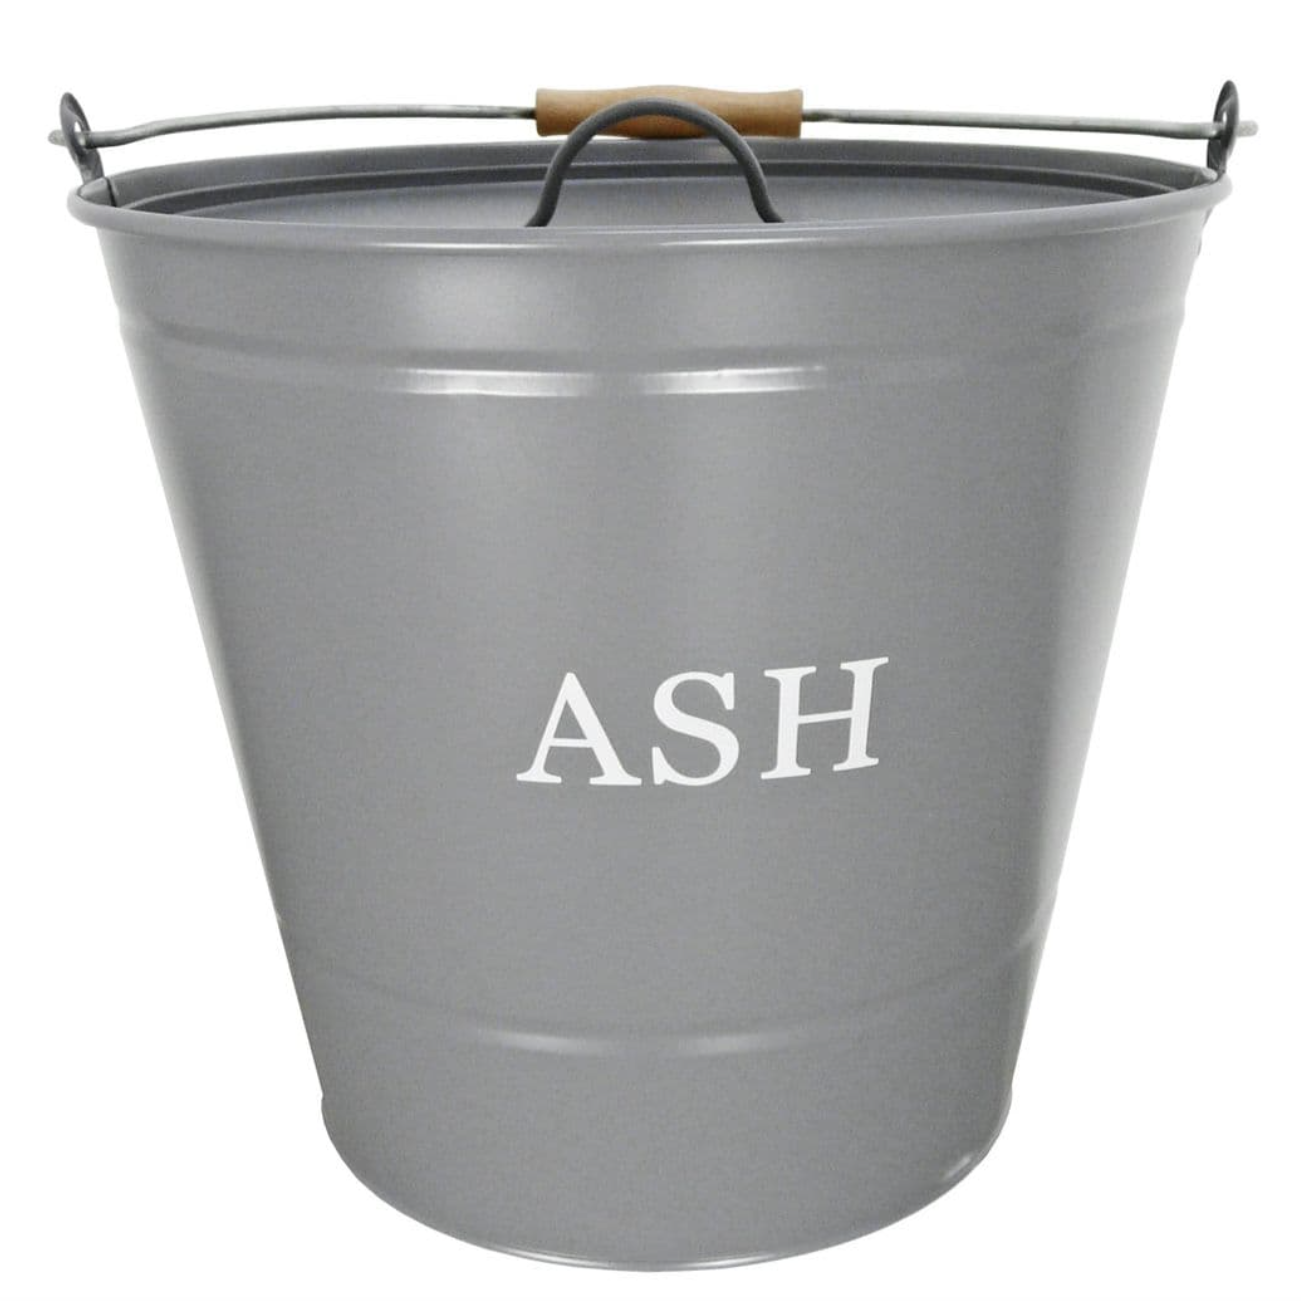 Ash Bucket With Lid